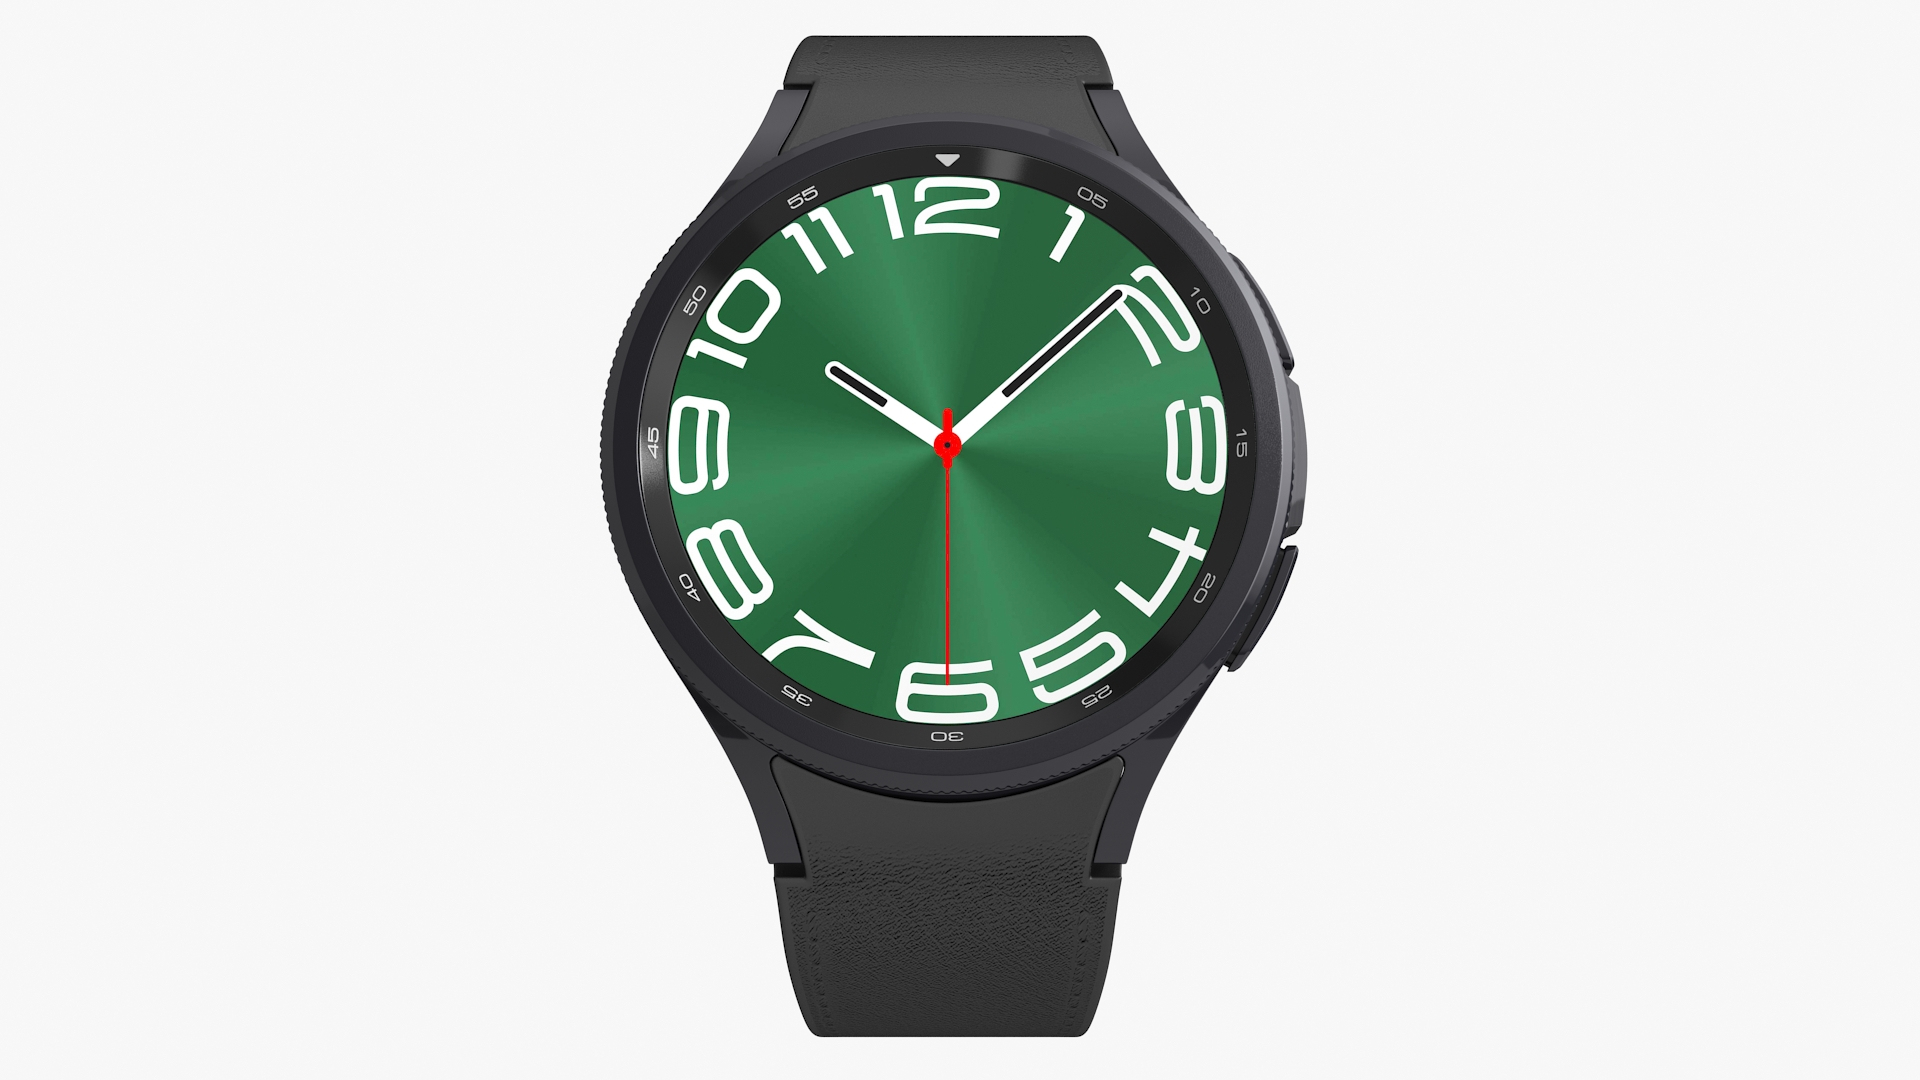 Samsung Galaxy Watch 6 Classic 47mm - Black/Green —